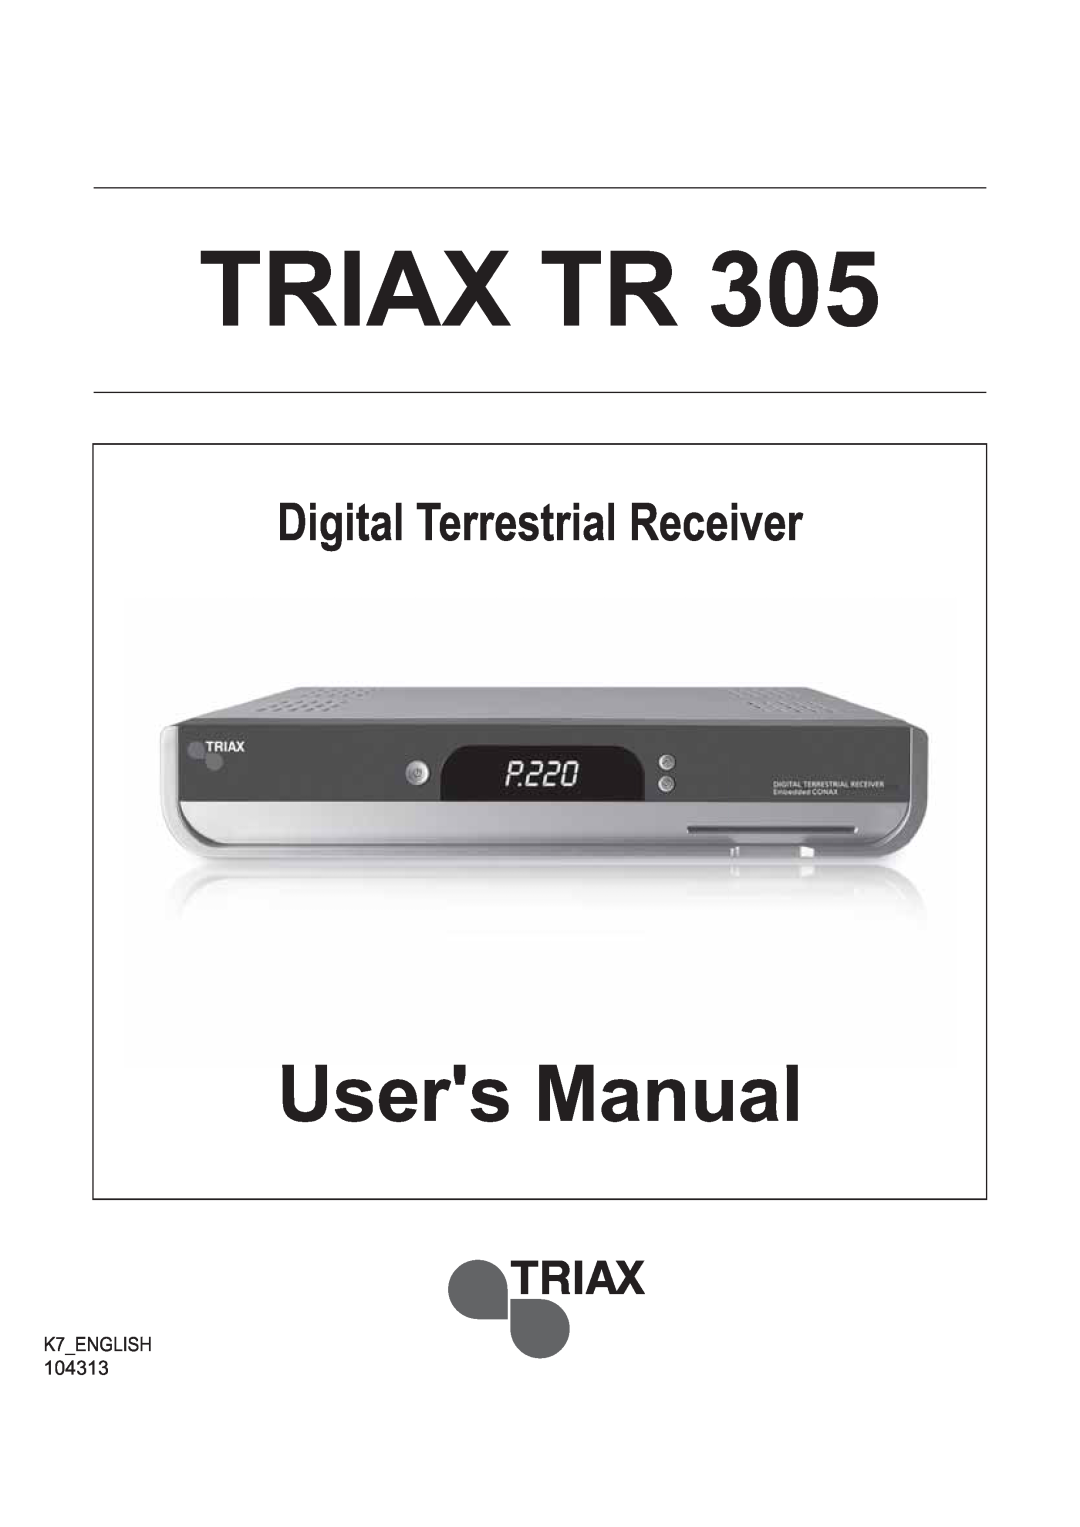 Triax TR 305 manual K7ENGLISH 104313, Triax Tr, Users Manual, Digital Terrestrial Receiver 